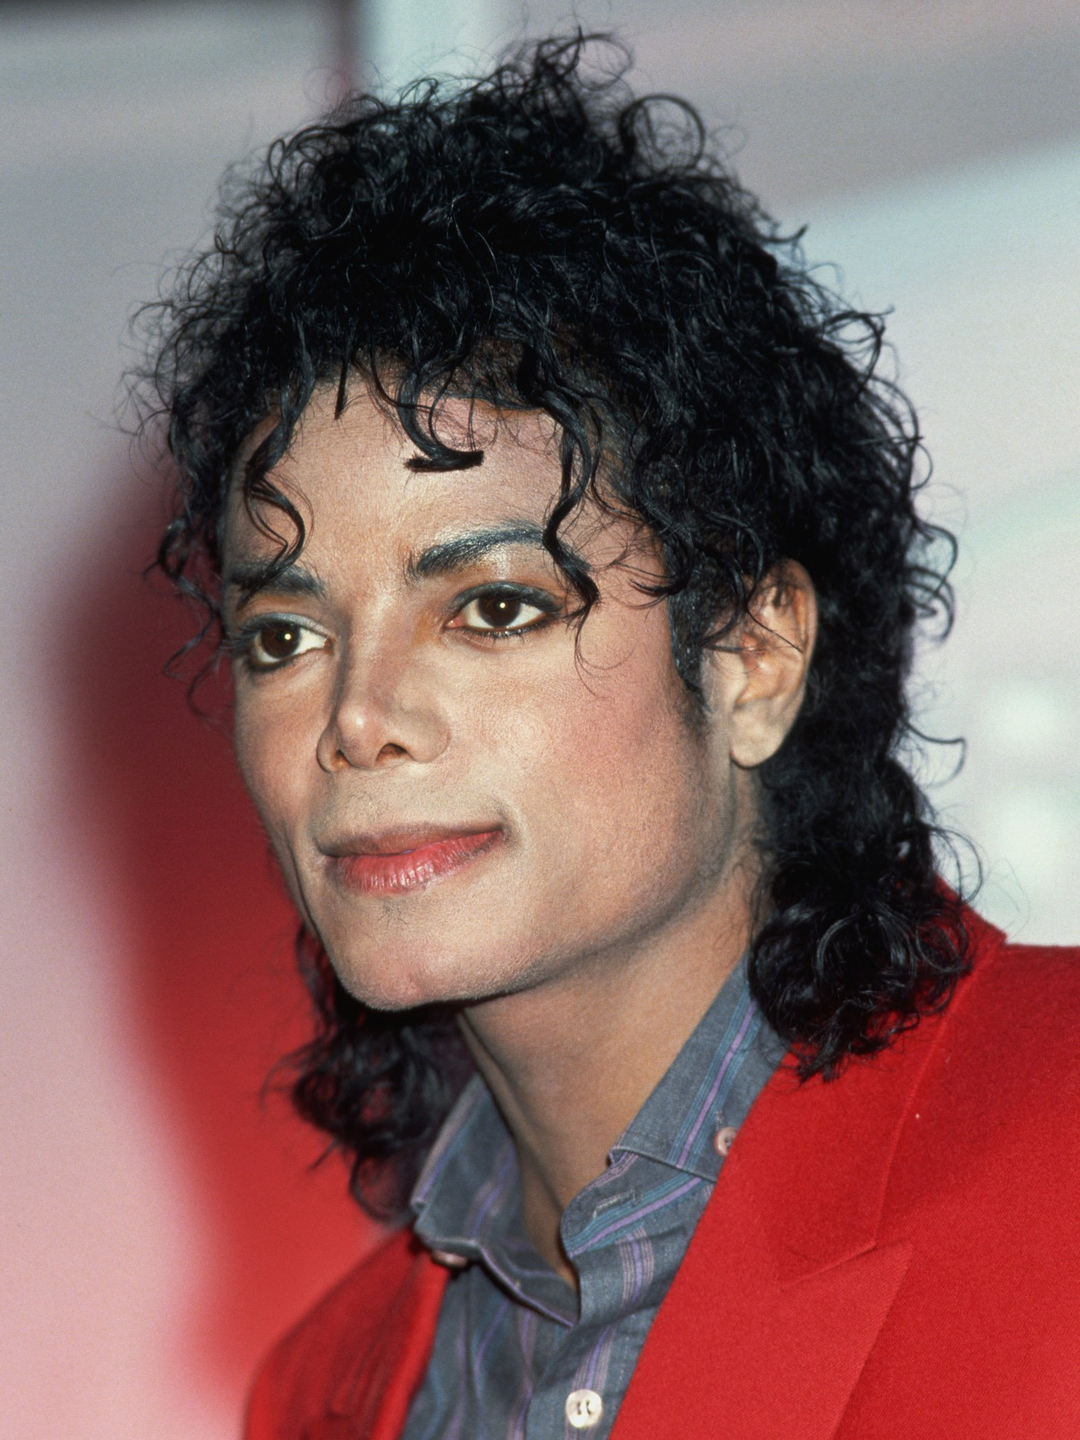 Michael Jackson dating history